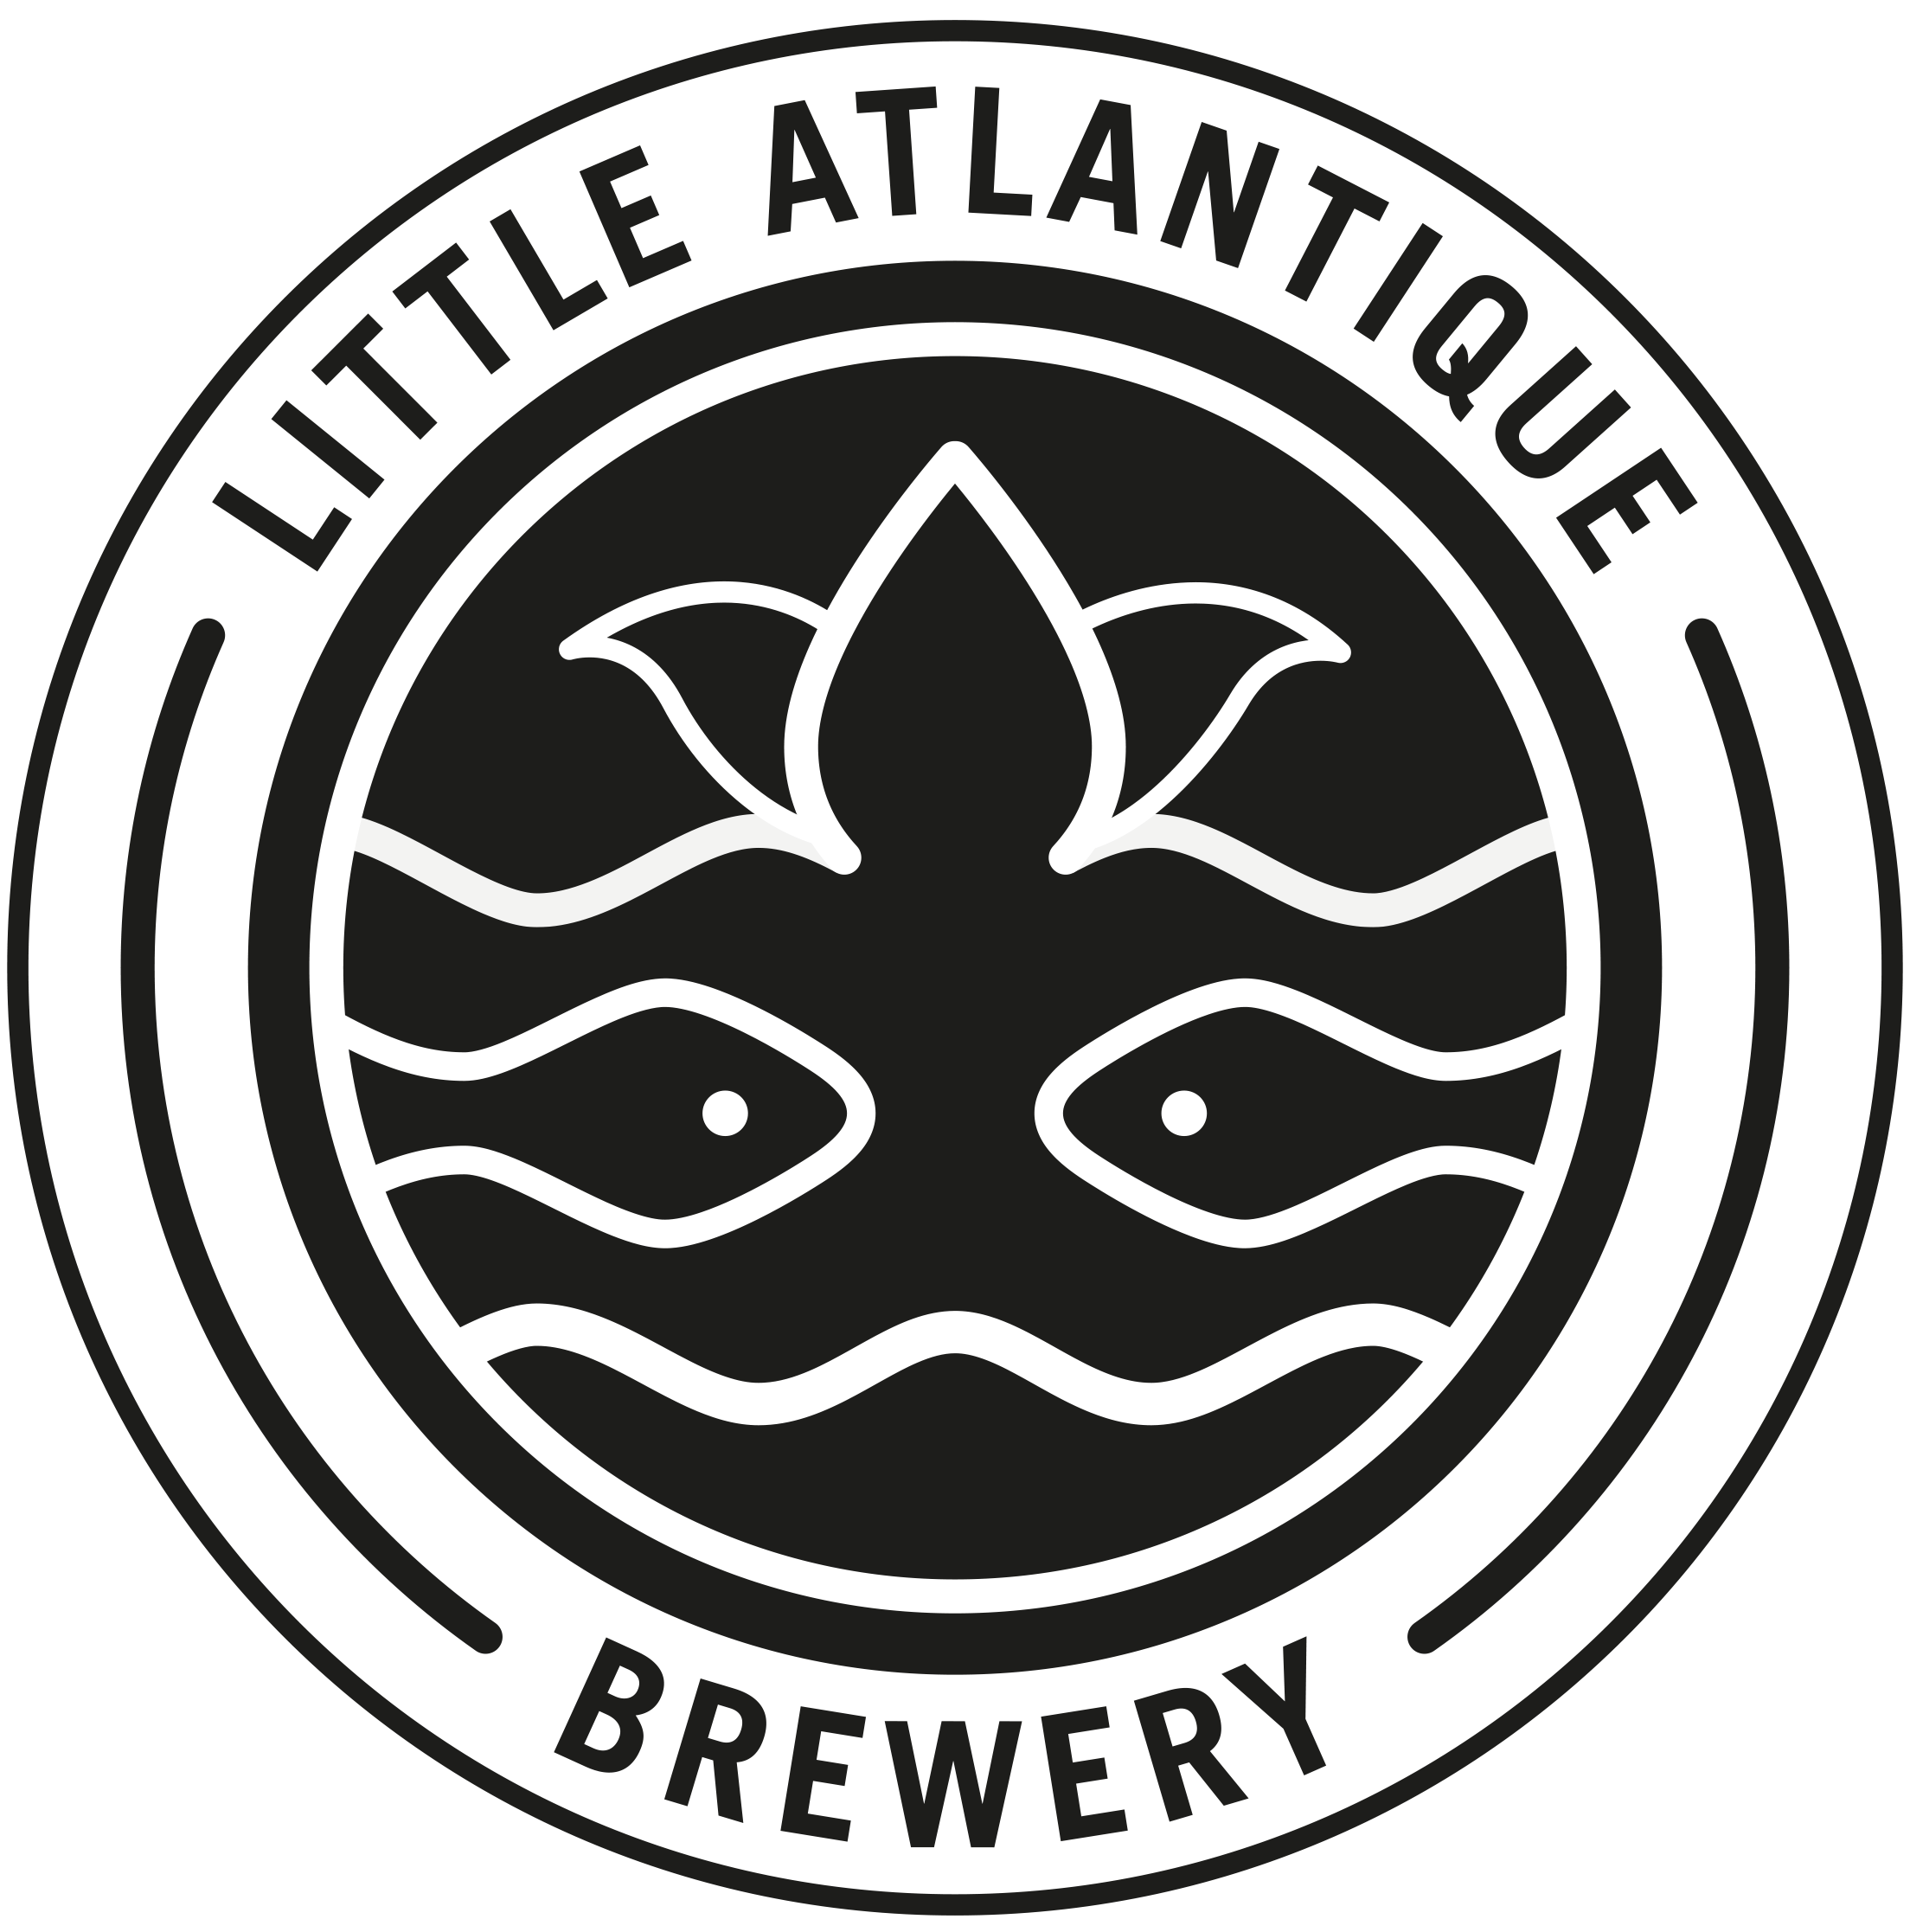 Little Atlantic Brewery